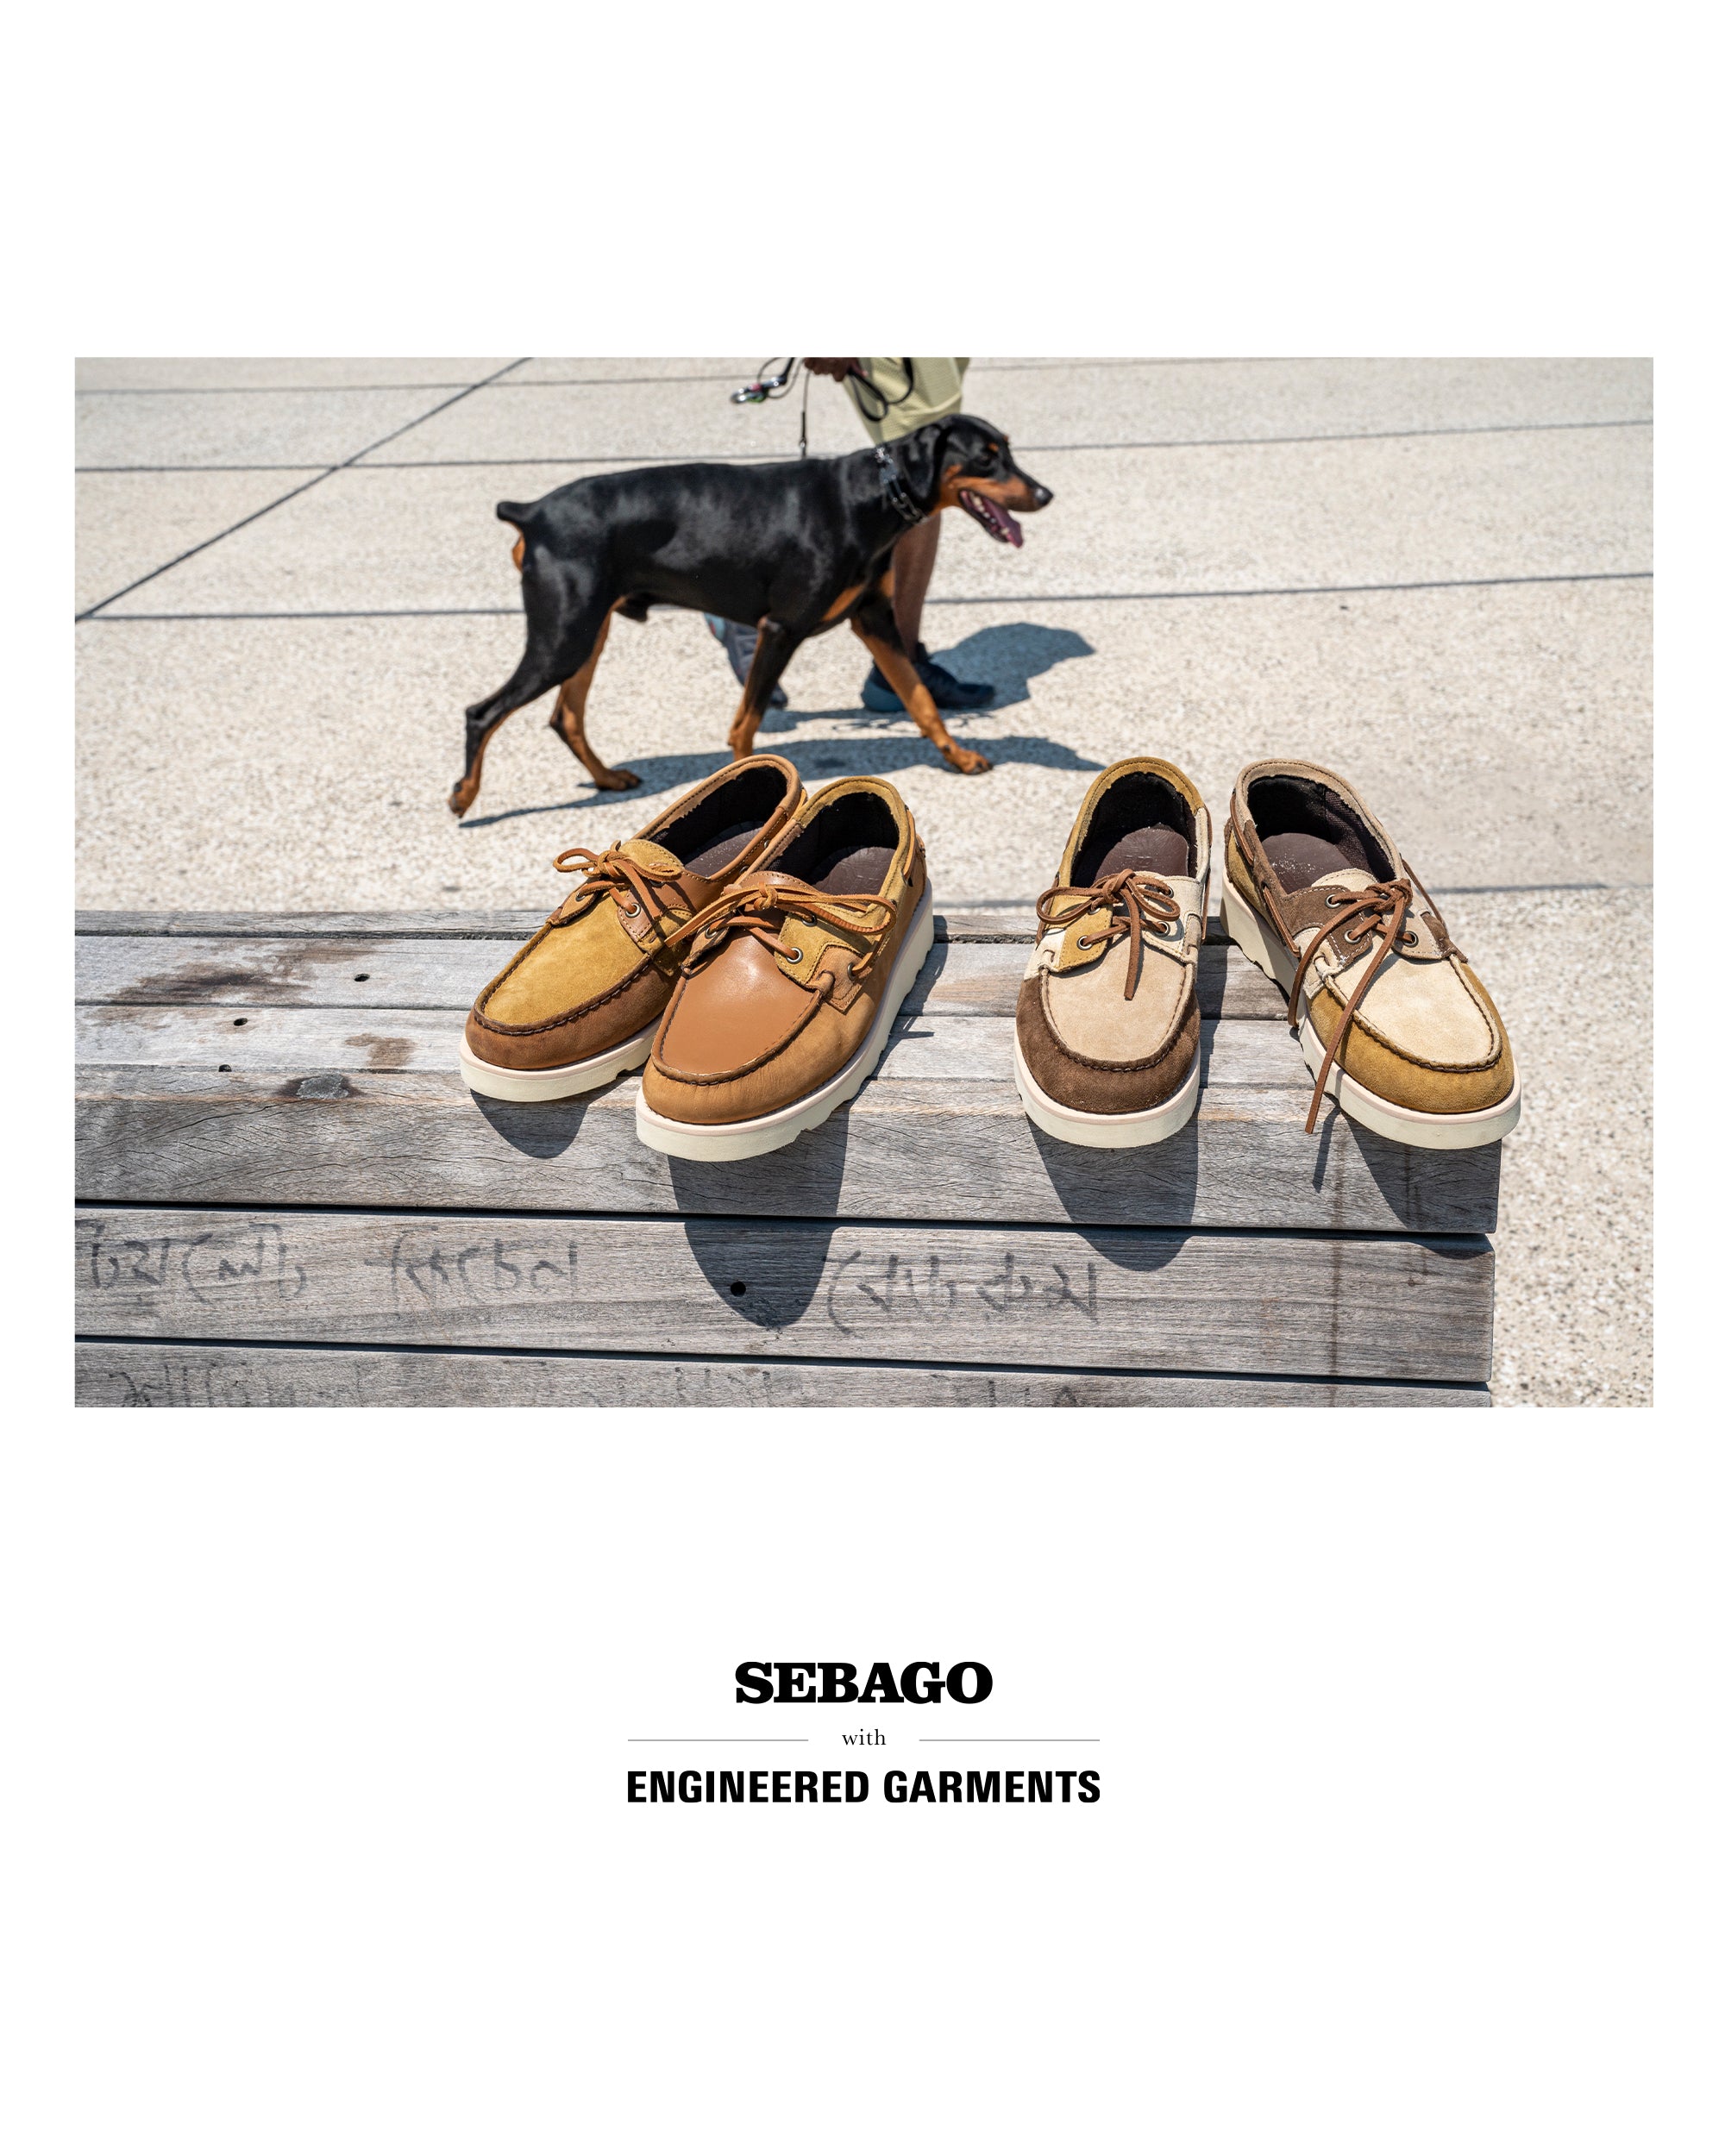 Engineered Garments x Sebago - Boat Shoe - Releasing Saturday 05.28.22